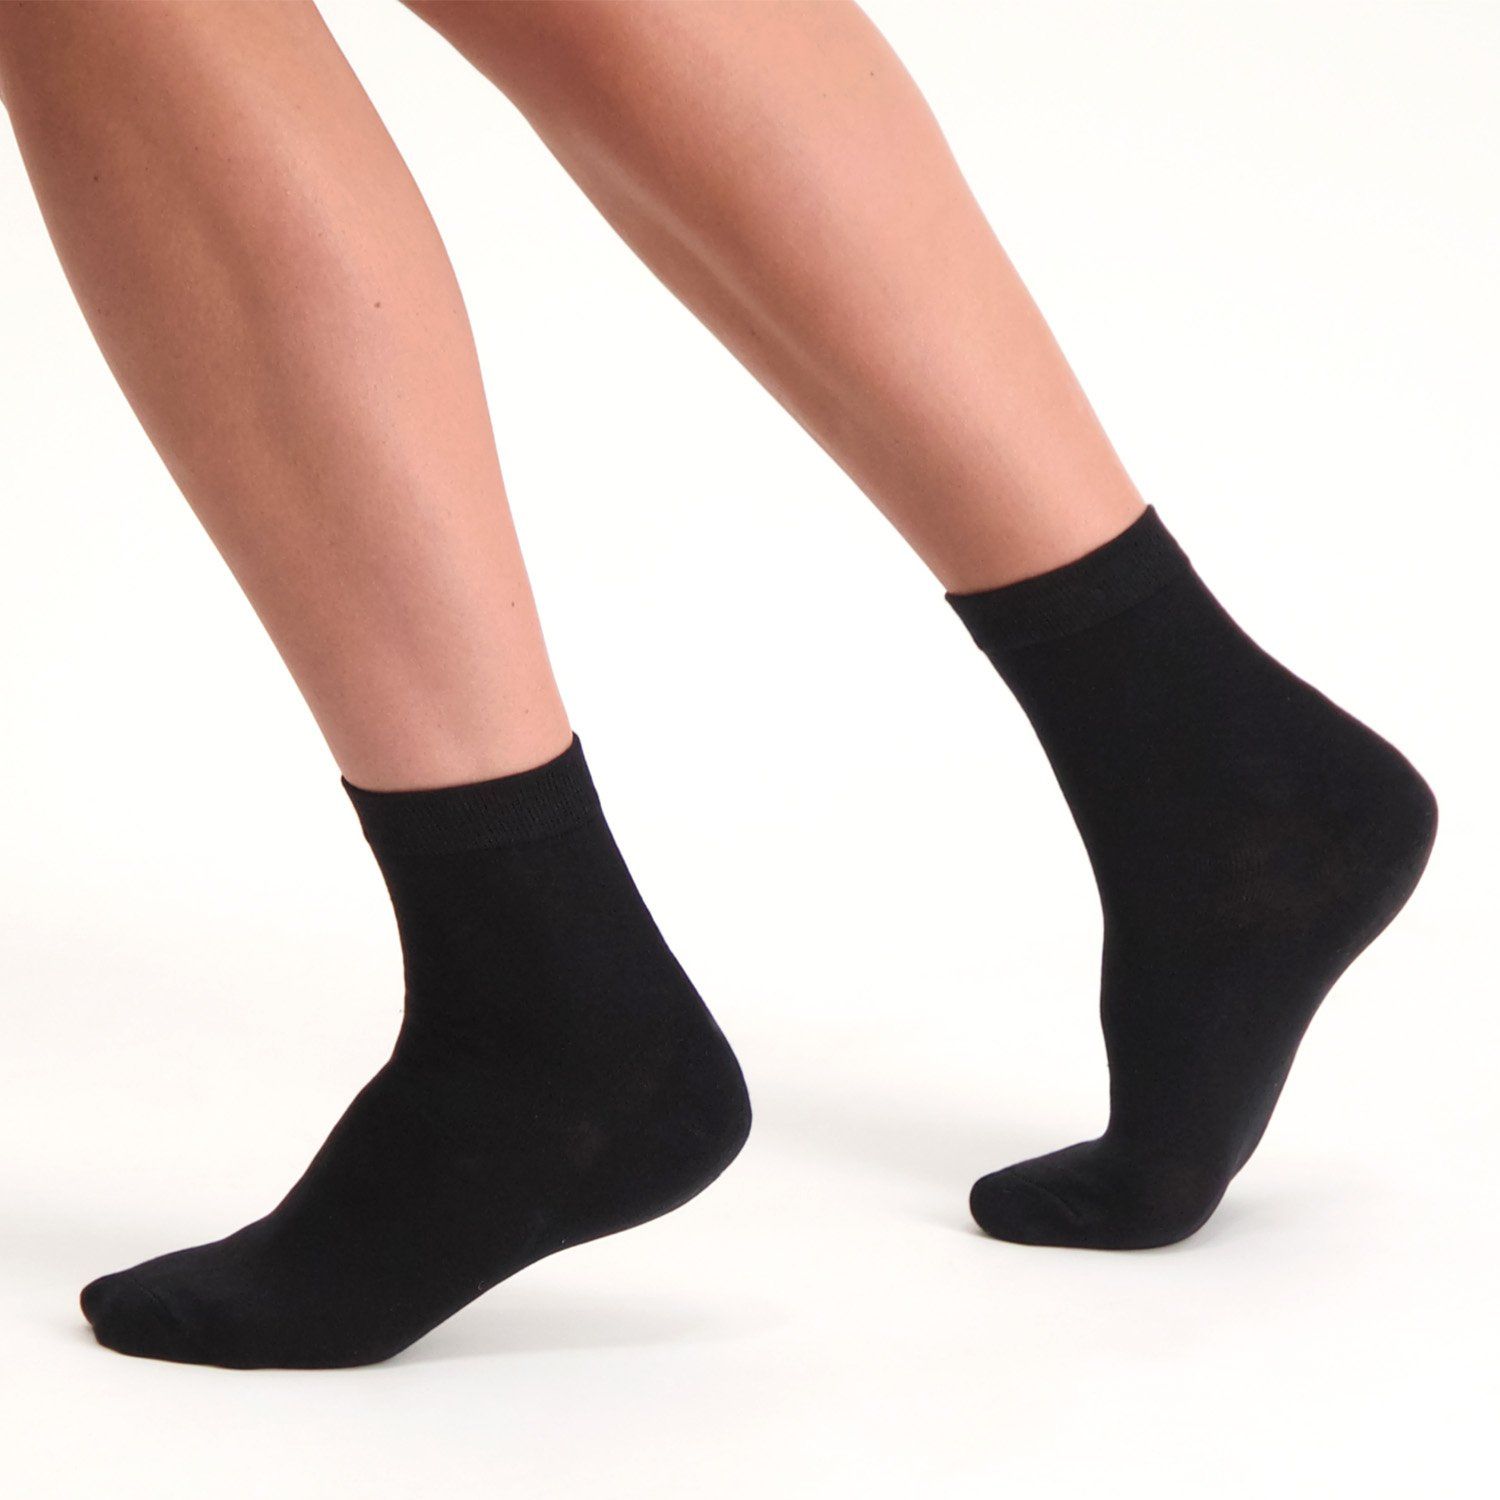 Solelution Socks with Silicone Gel Heel (per pair) worn by model